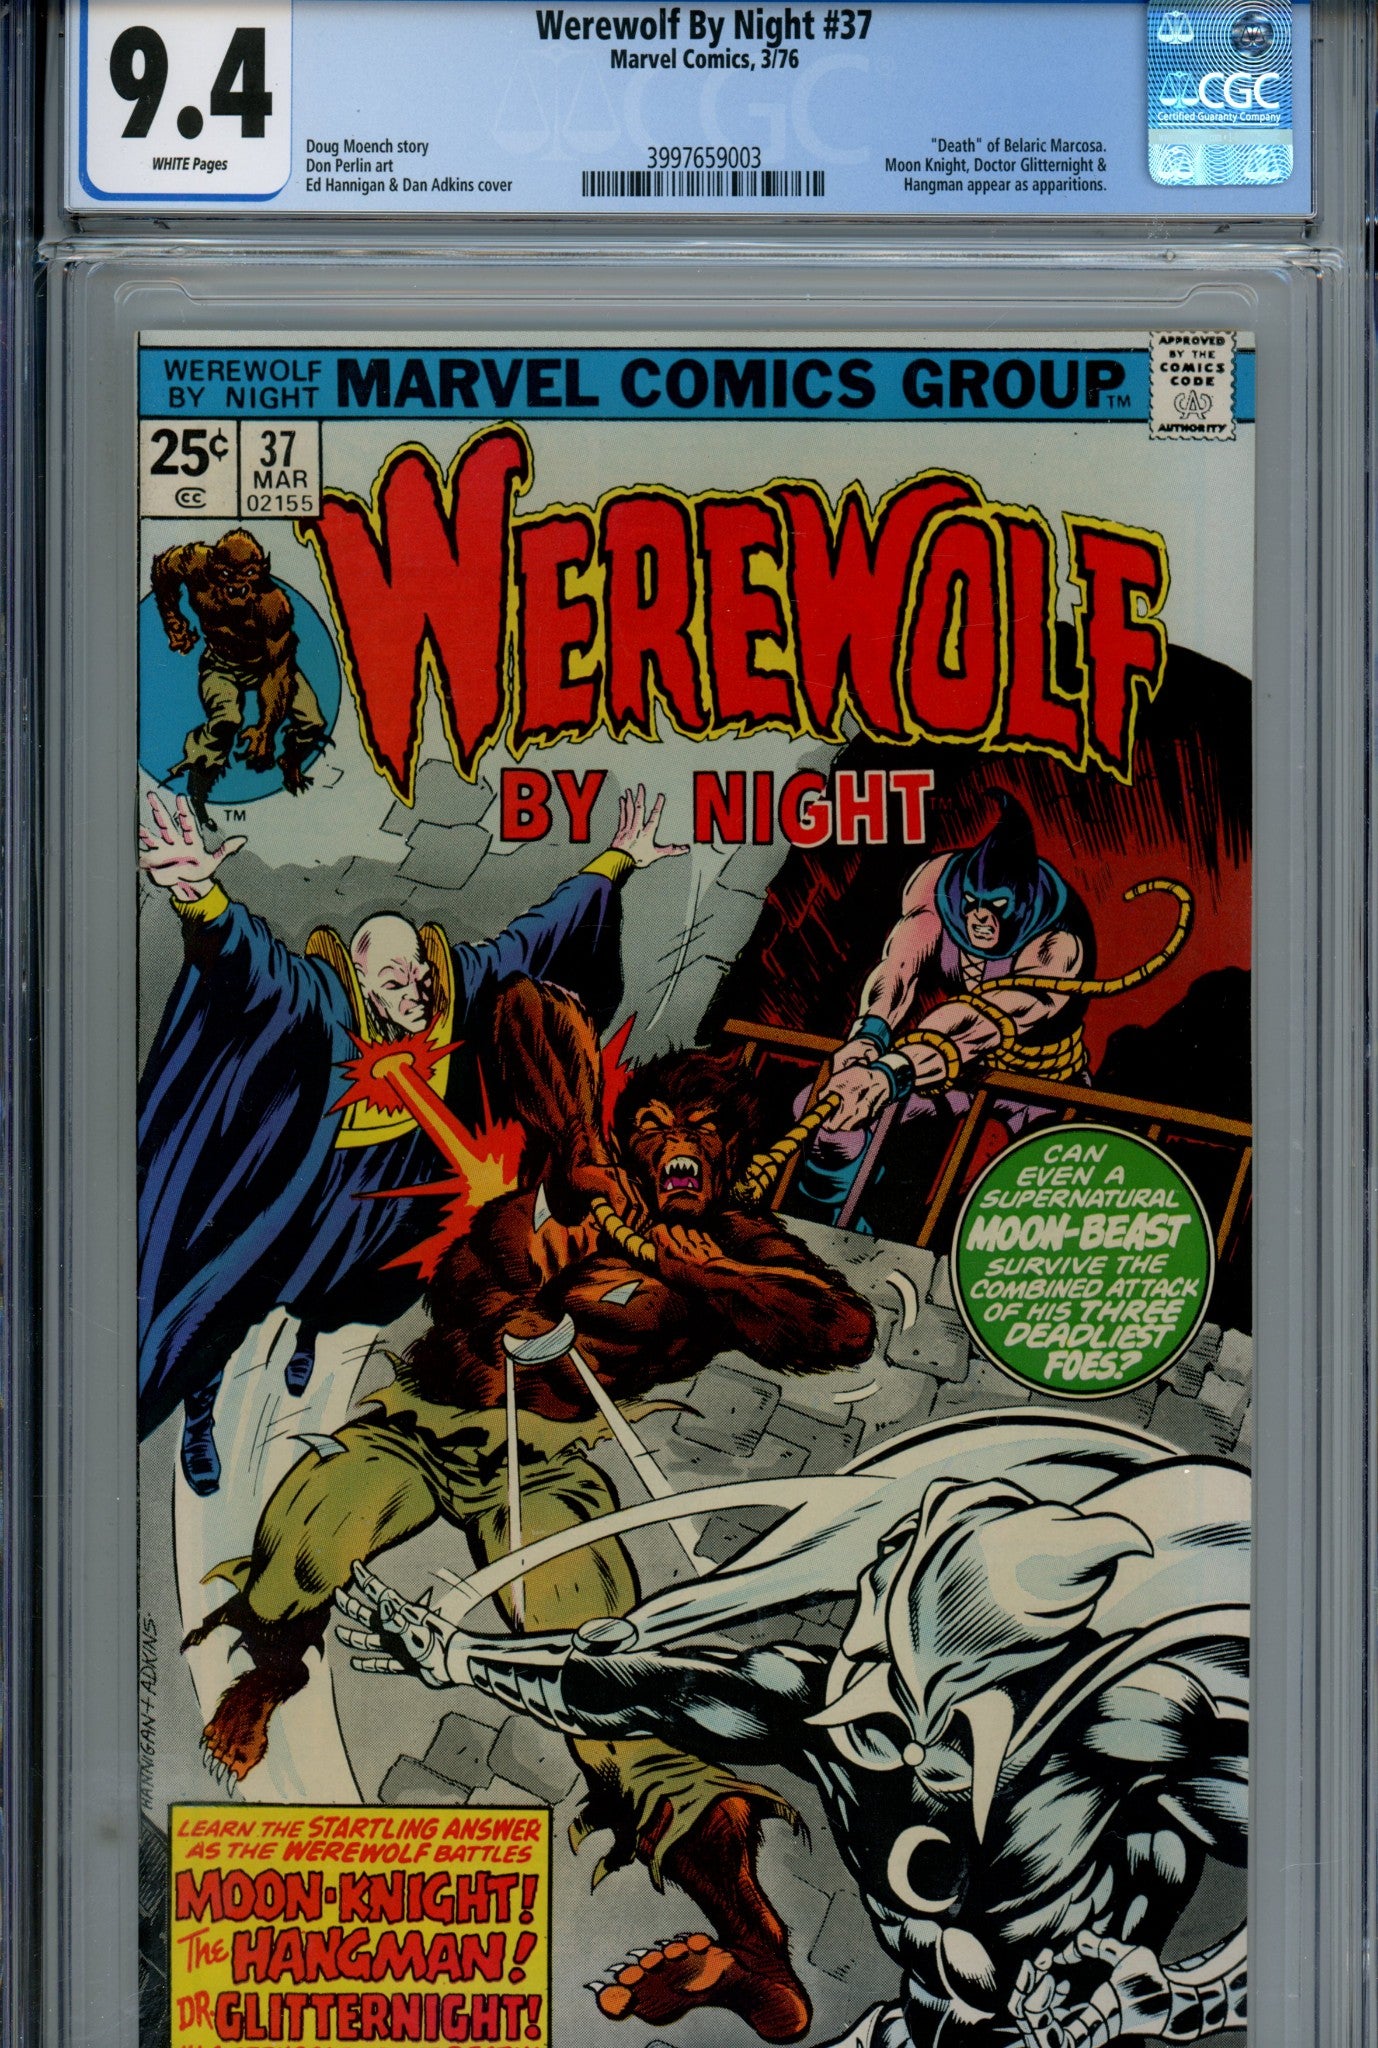 Werewolf by Night Vol 1 37 CGC 9.4 (1976)